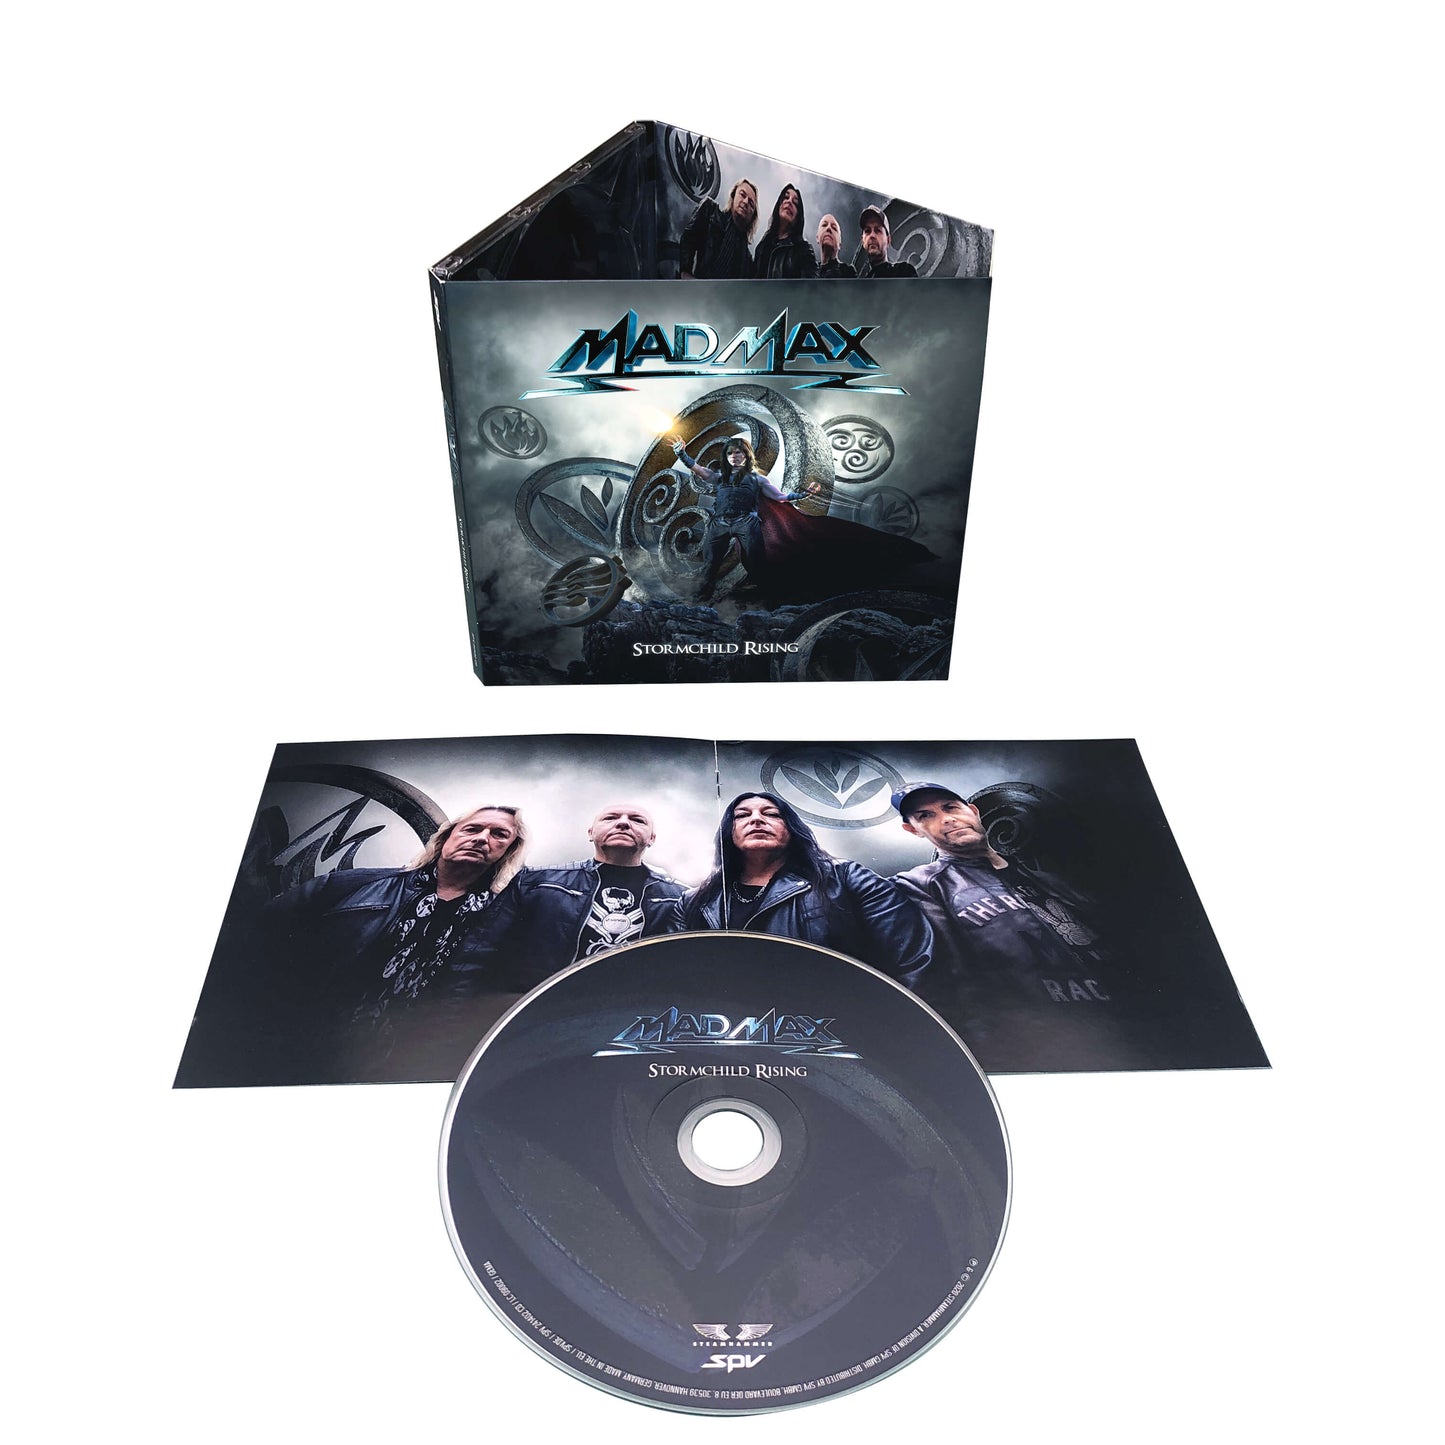 Mad Max "Stormchild Rising" CD-Bundle "Rising"